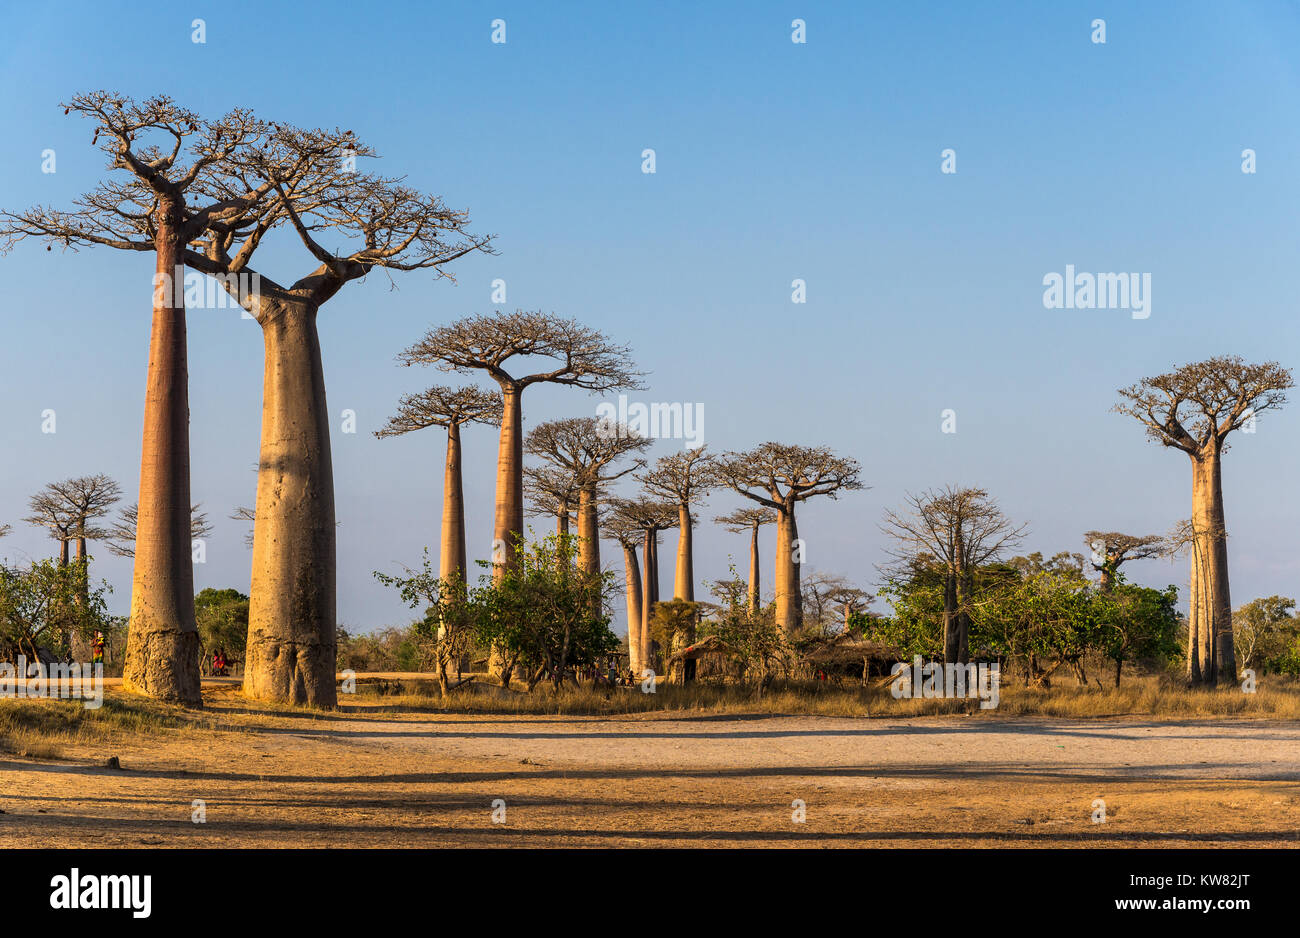 Giant Baobab trees (Adansonia grandidieri) along the Avenue of Baobabs. Madagascar, Africa. Stock Photo